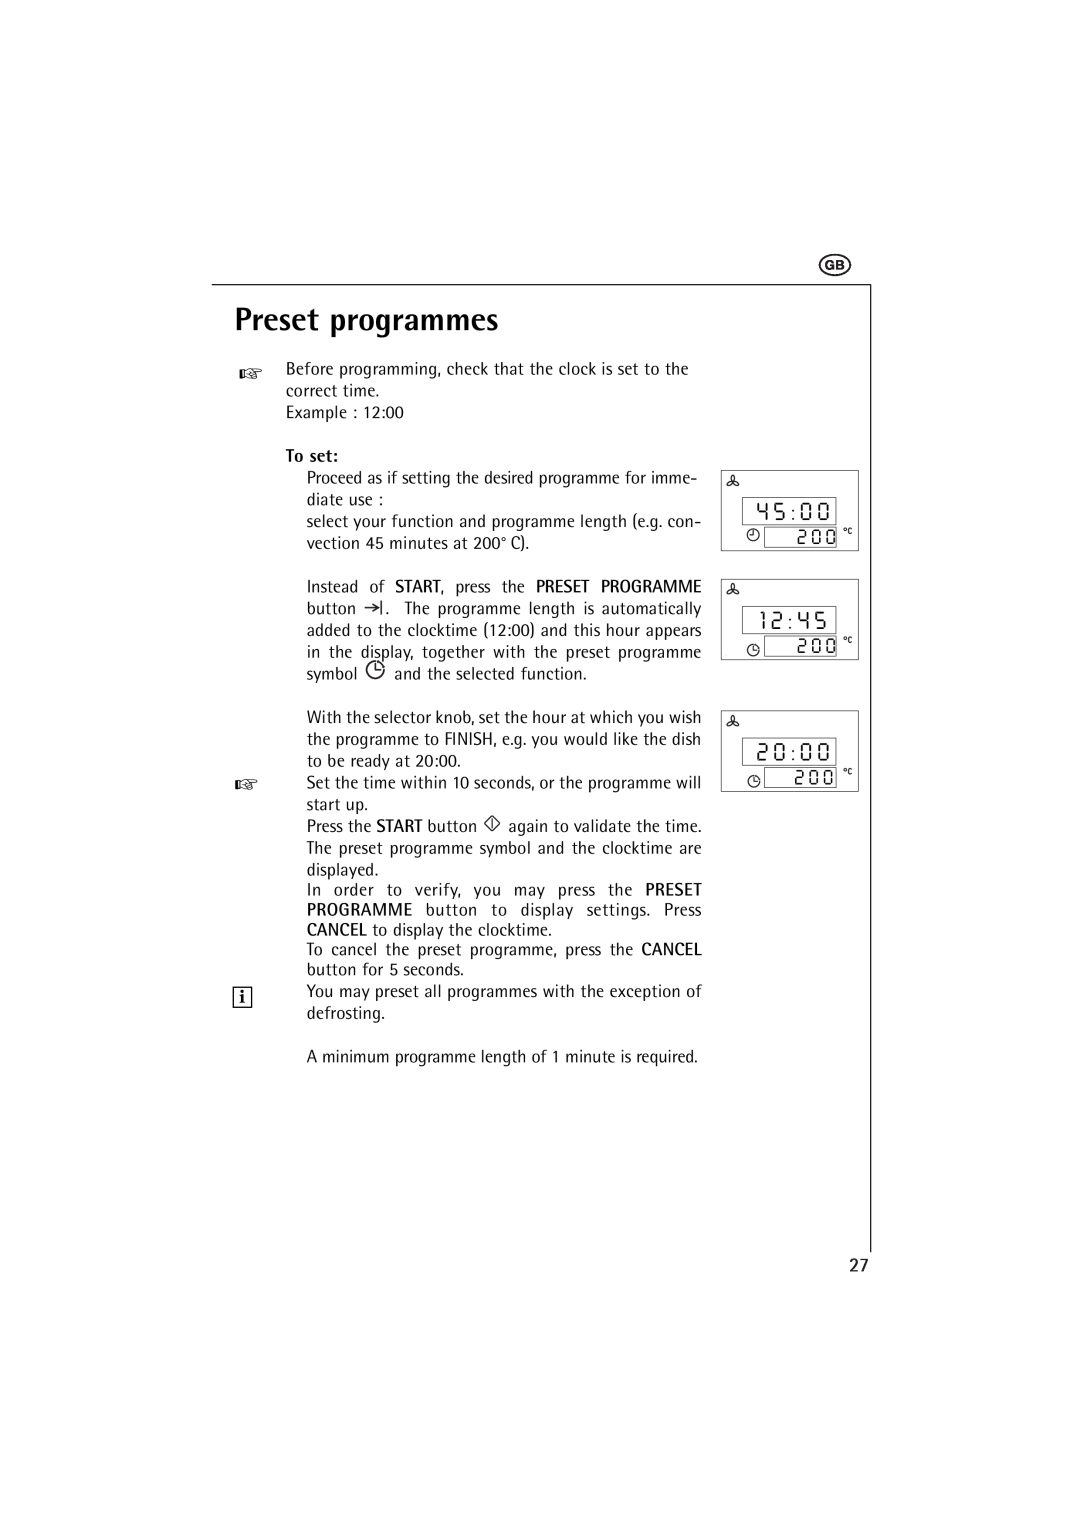 AEG MCC 663 instruction manual Preset programmes, 1 2, To set 